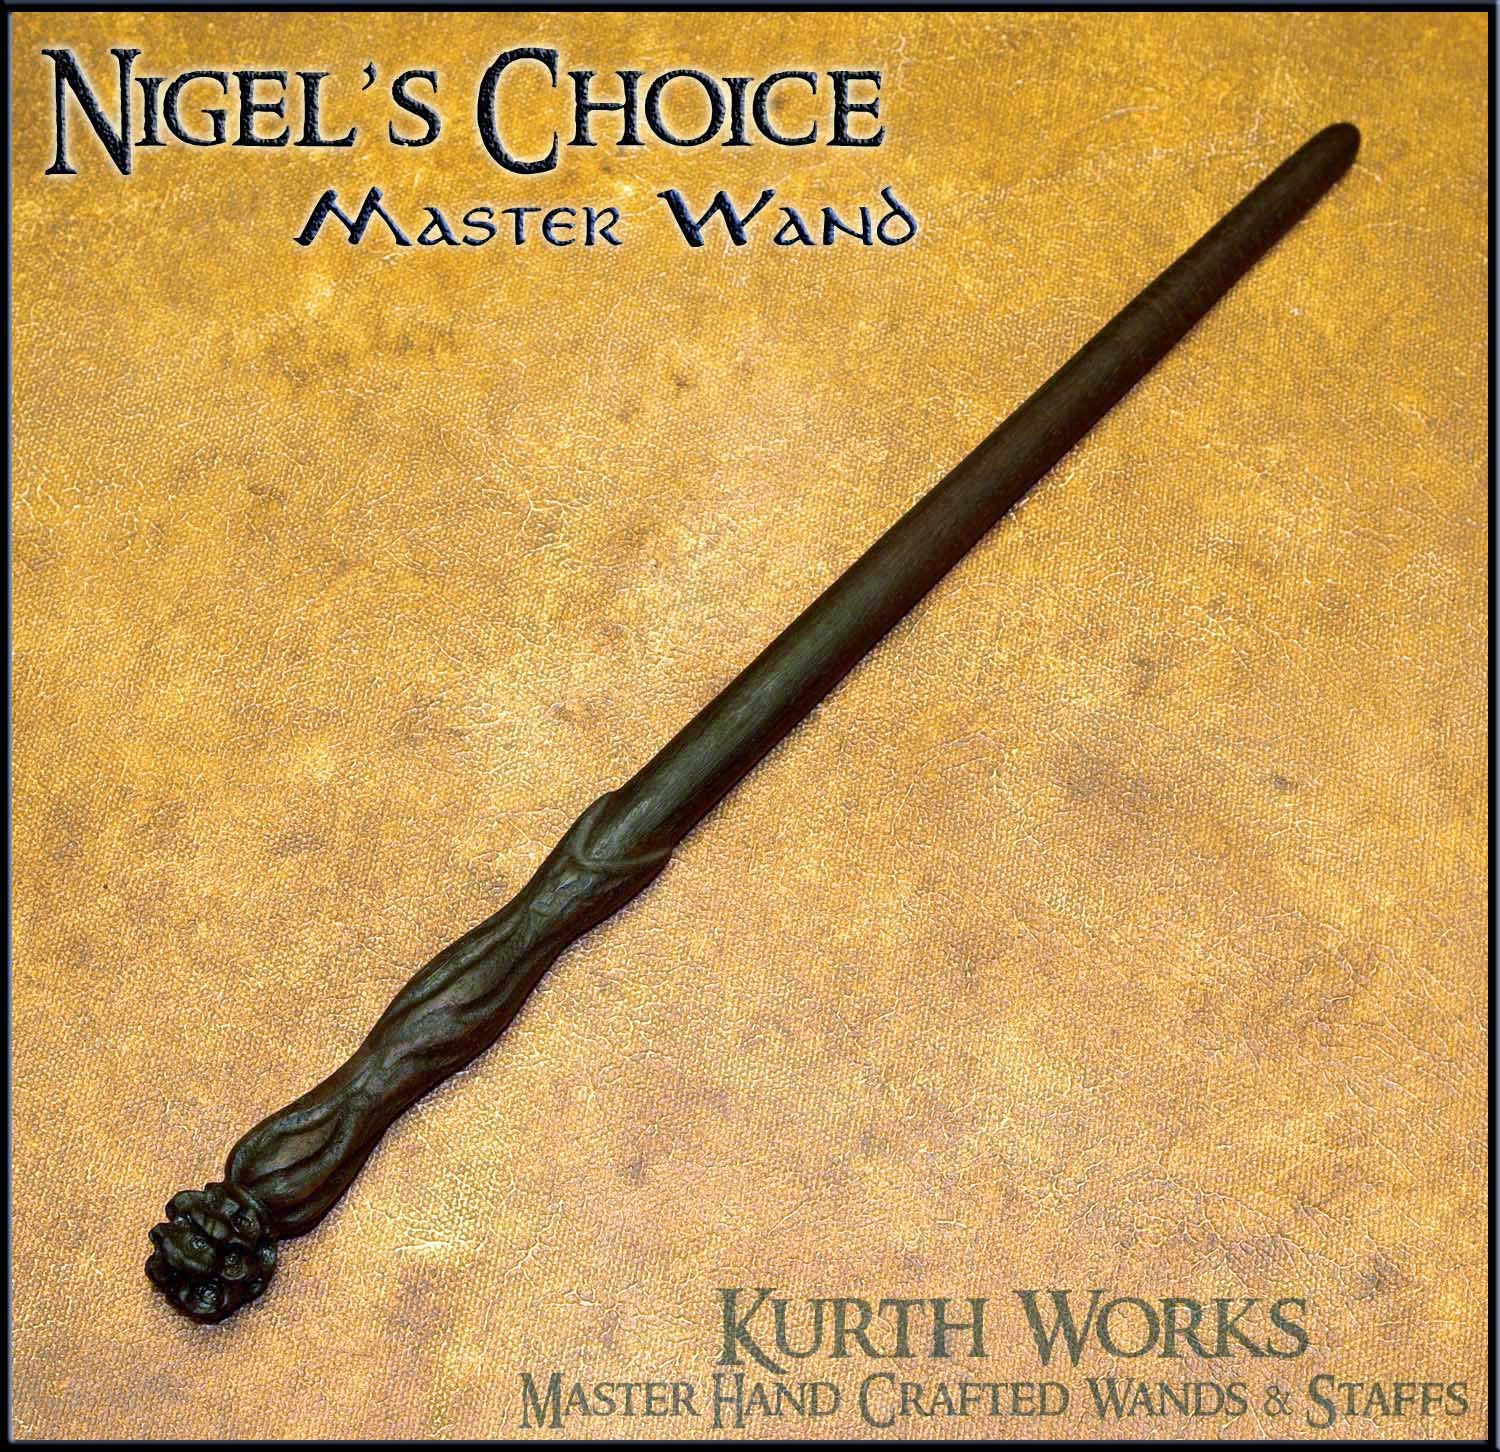 Nigel's Choice Wizard Magic Wand